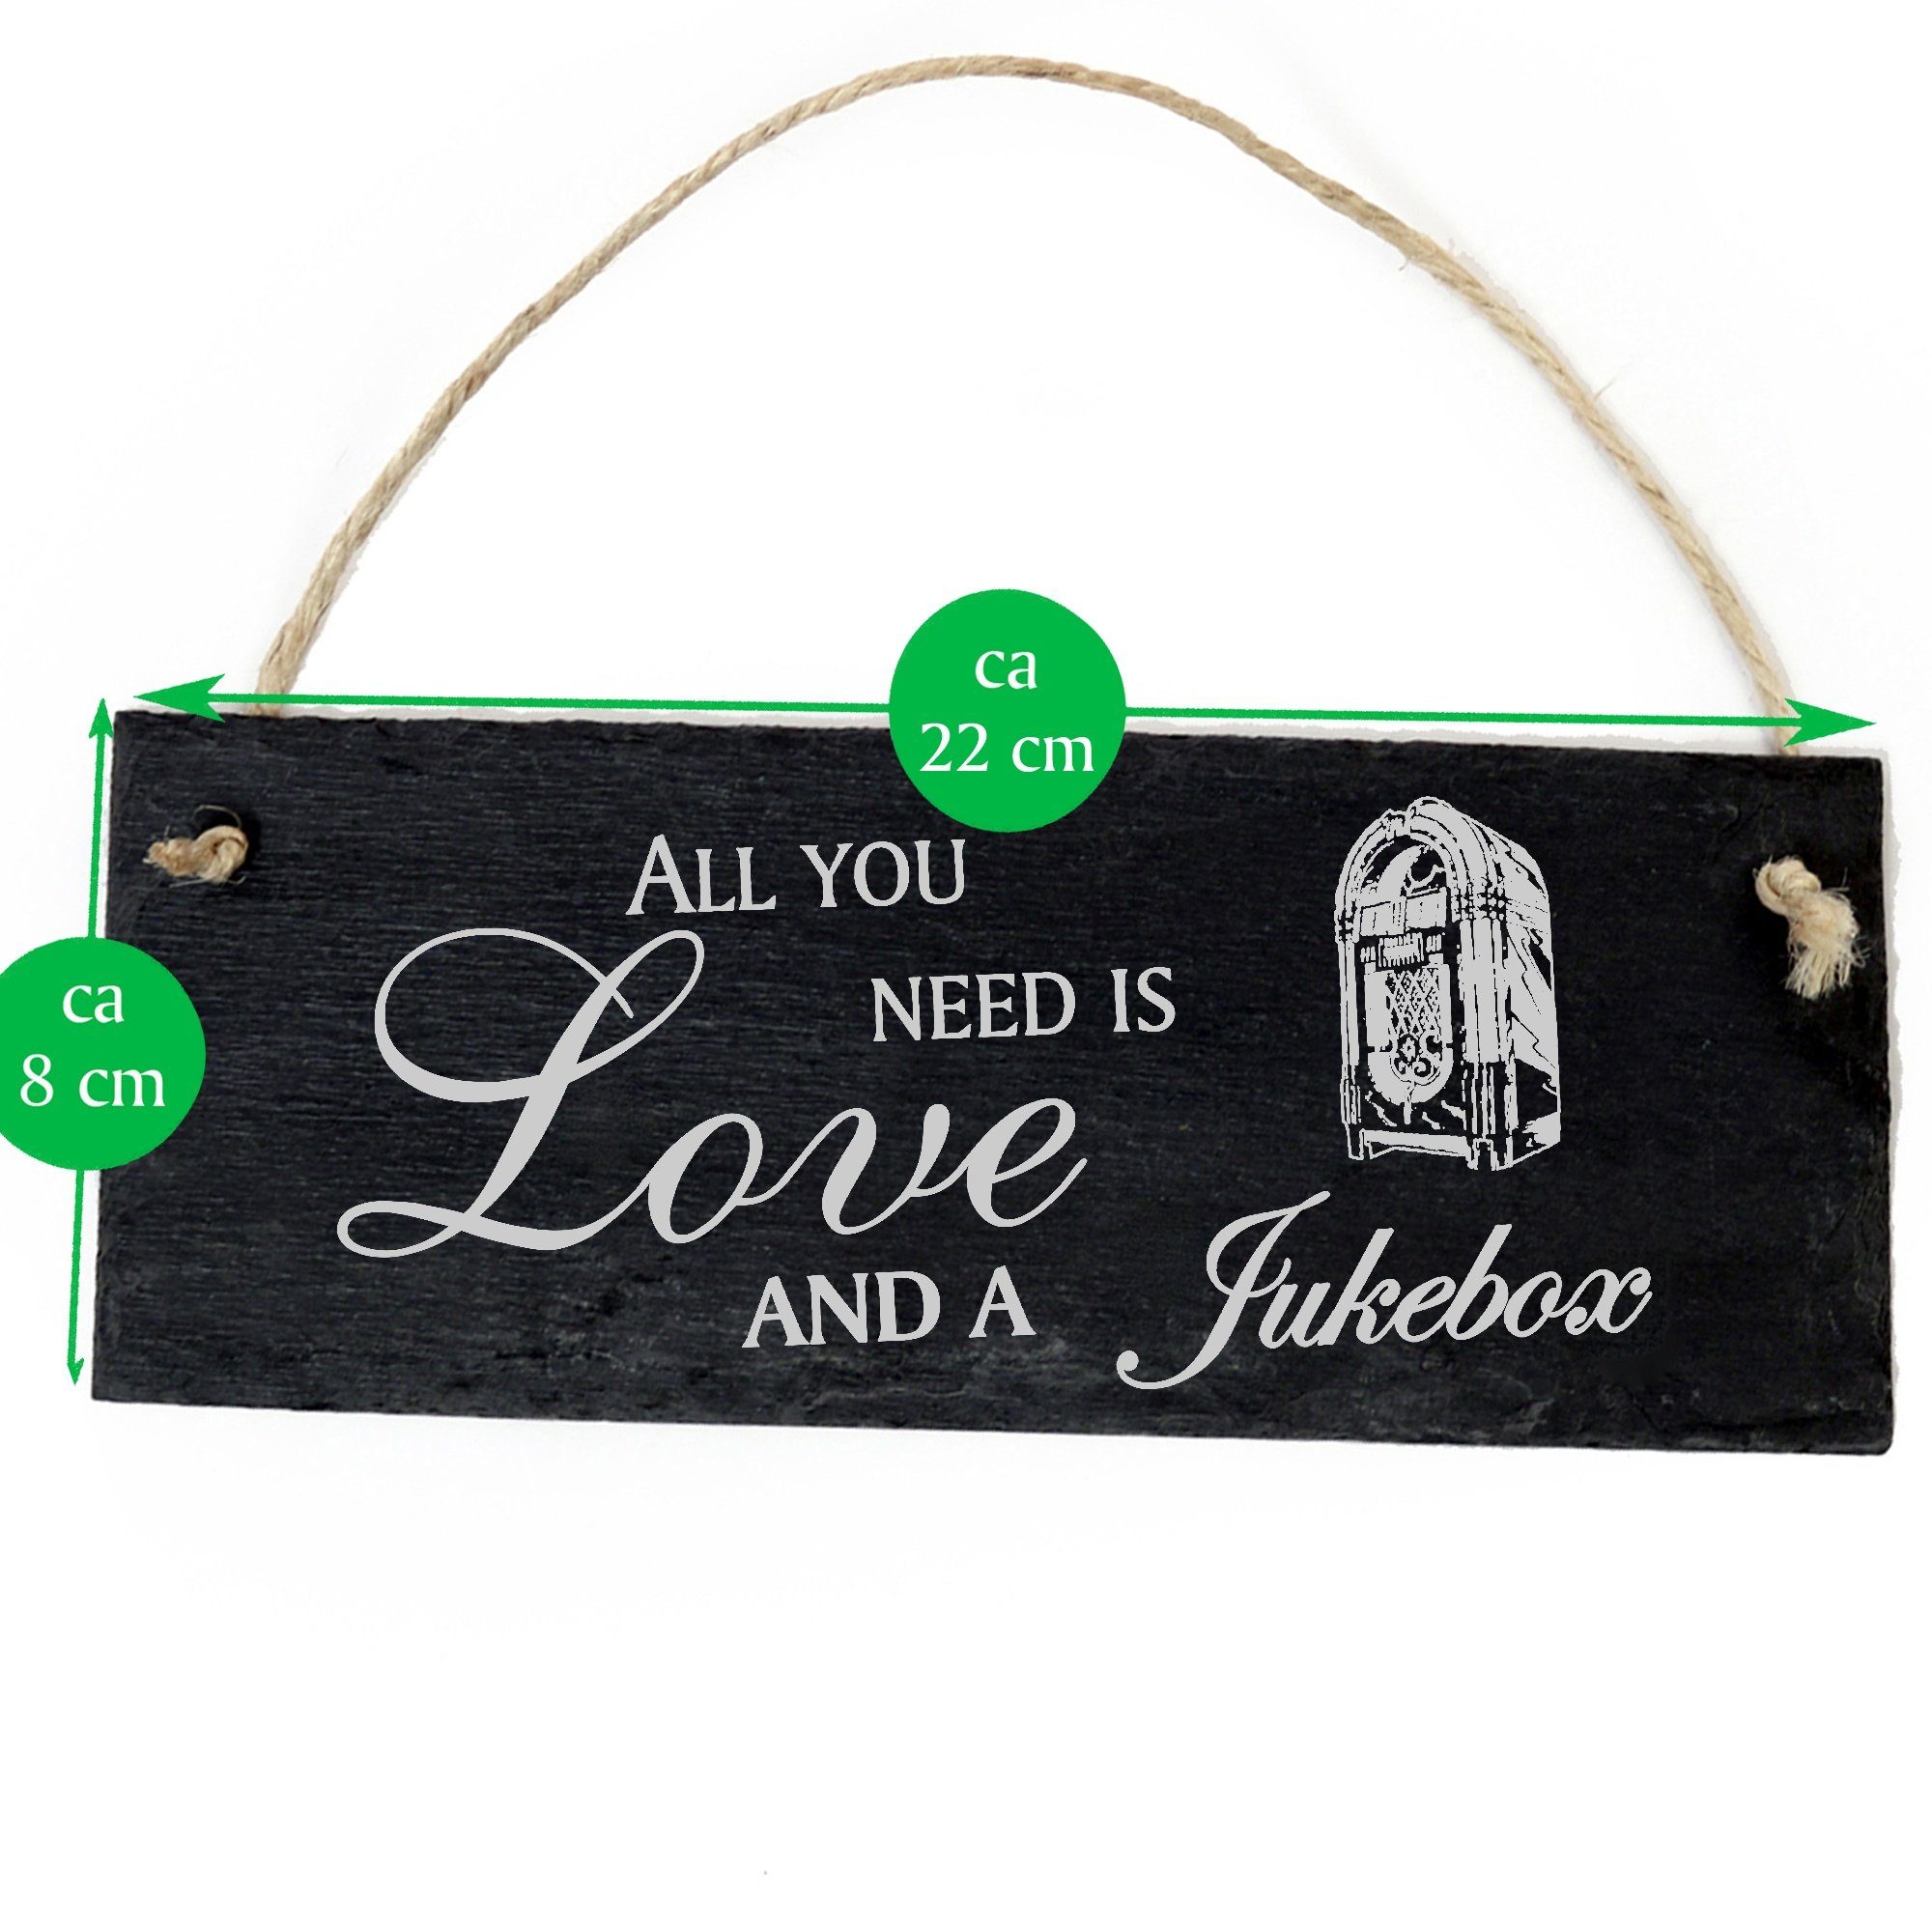 Jukebox you All Jukebox and a Hängedekoration Dekolando is 22x8cm Love need